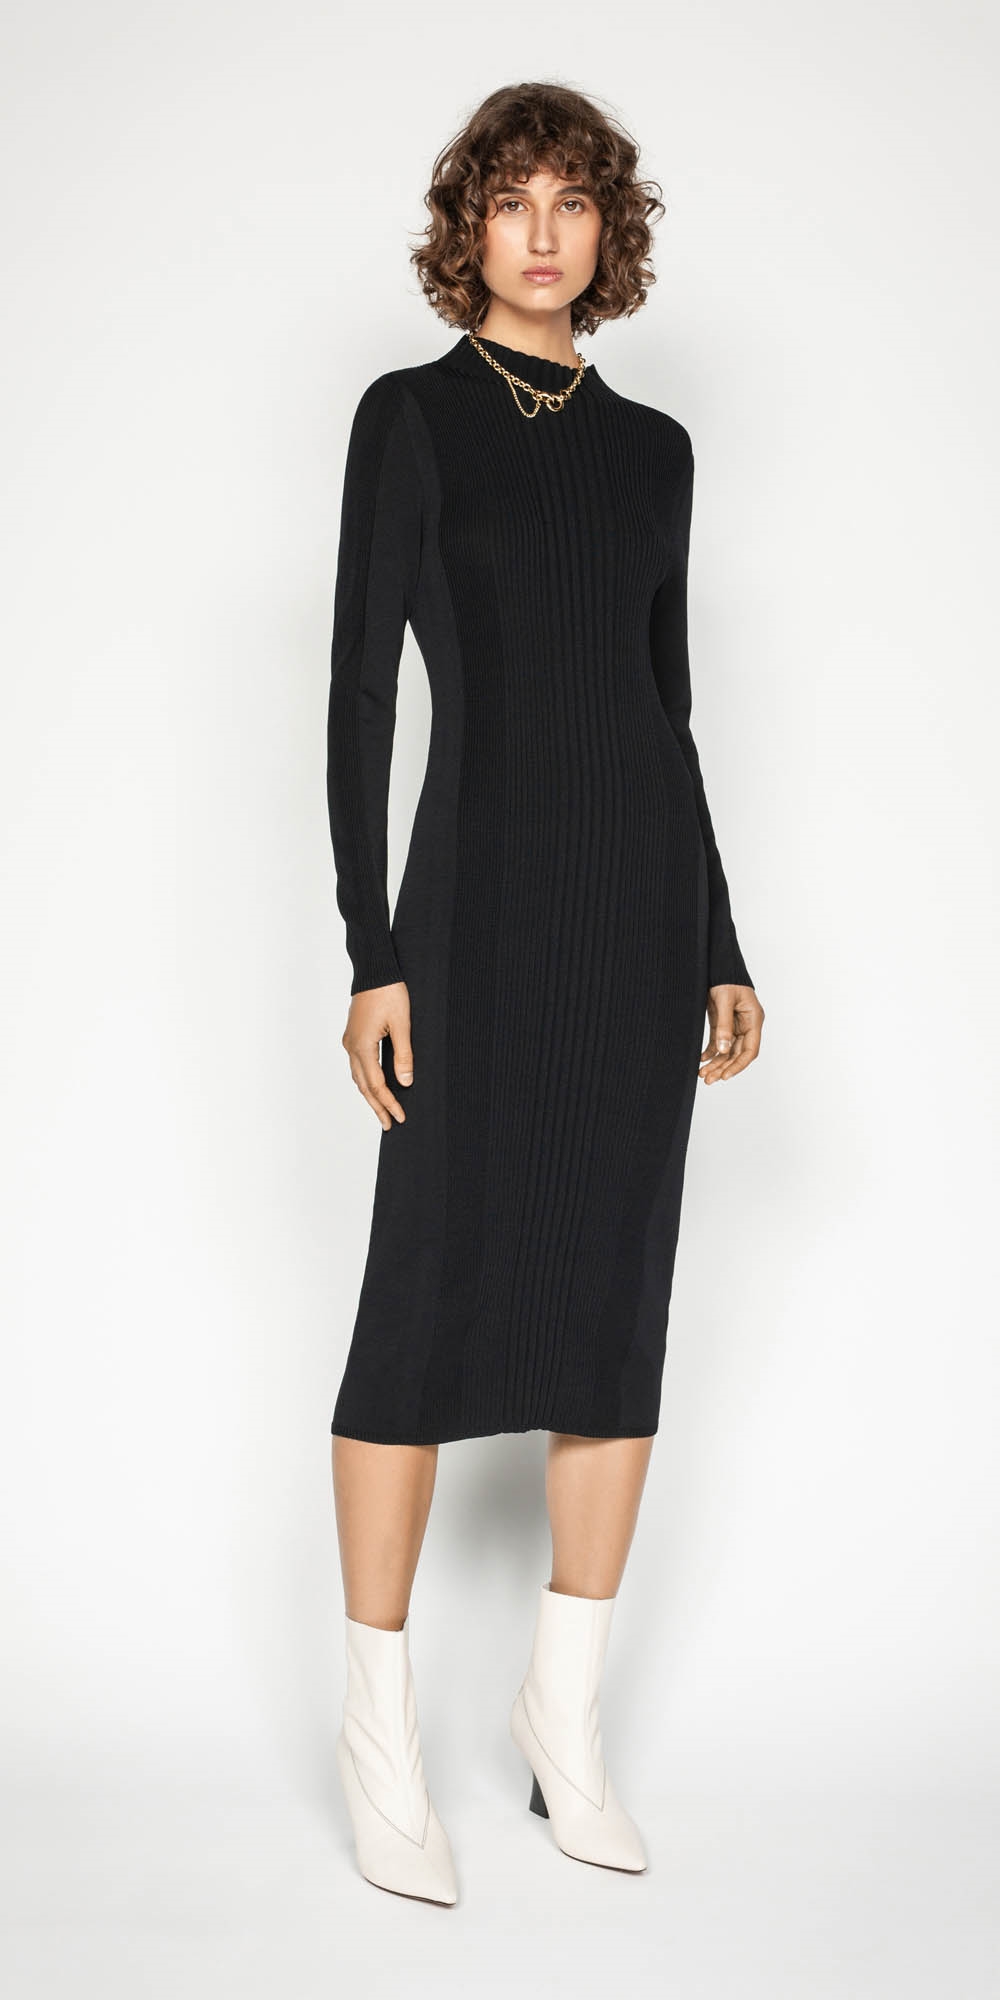 Rib Knit Dress | Buy Dresses Online - Cue